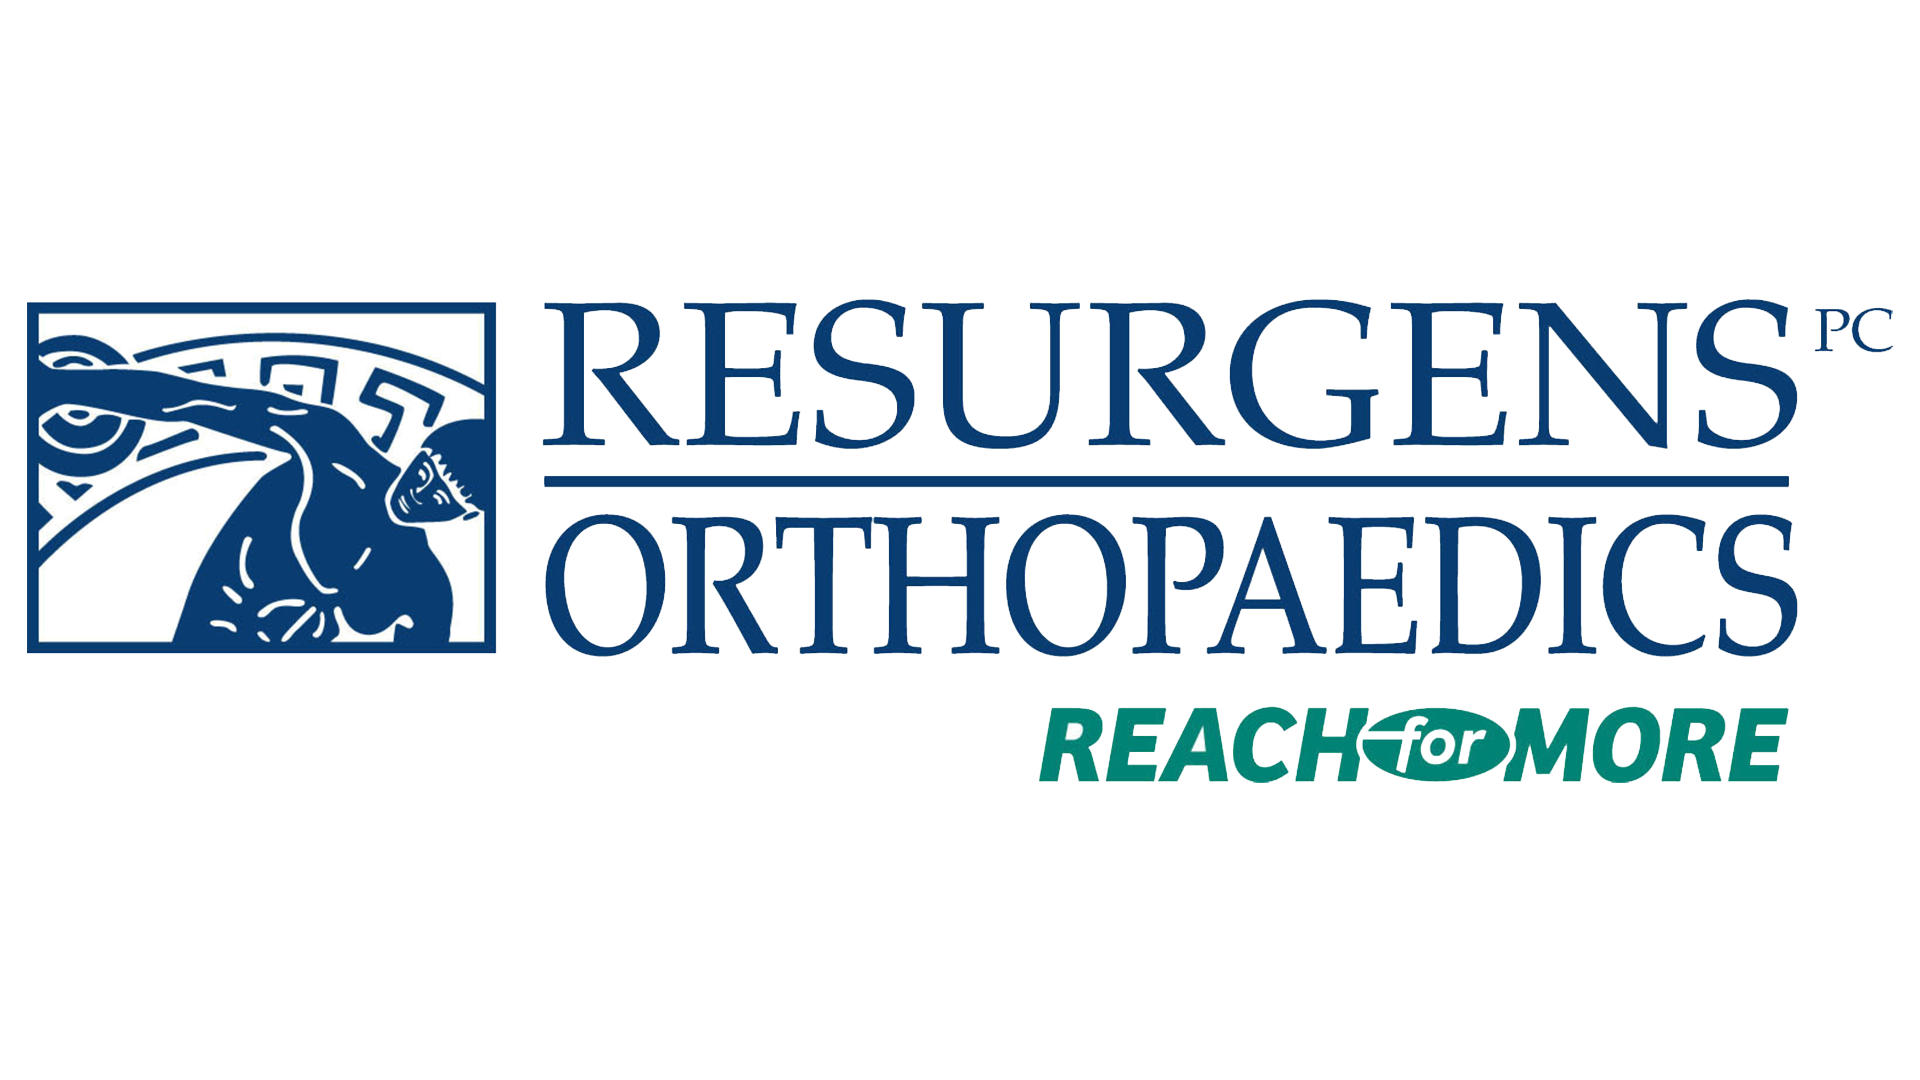 Resurgens Orthopaedics logo